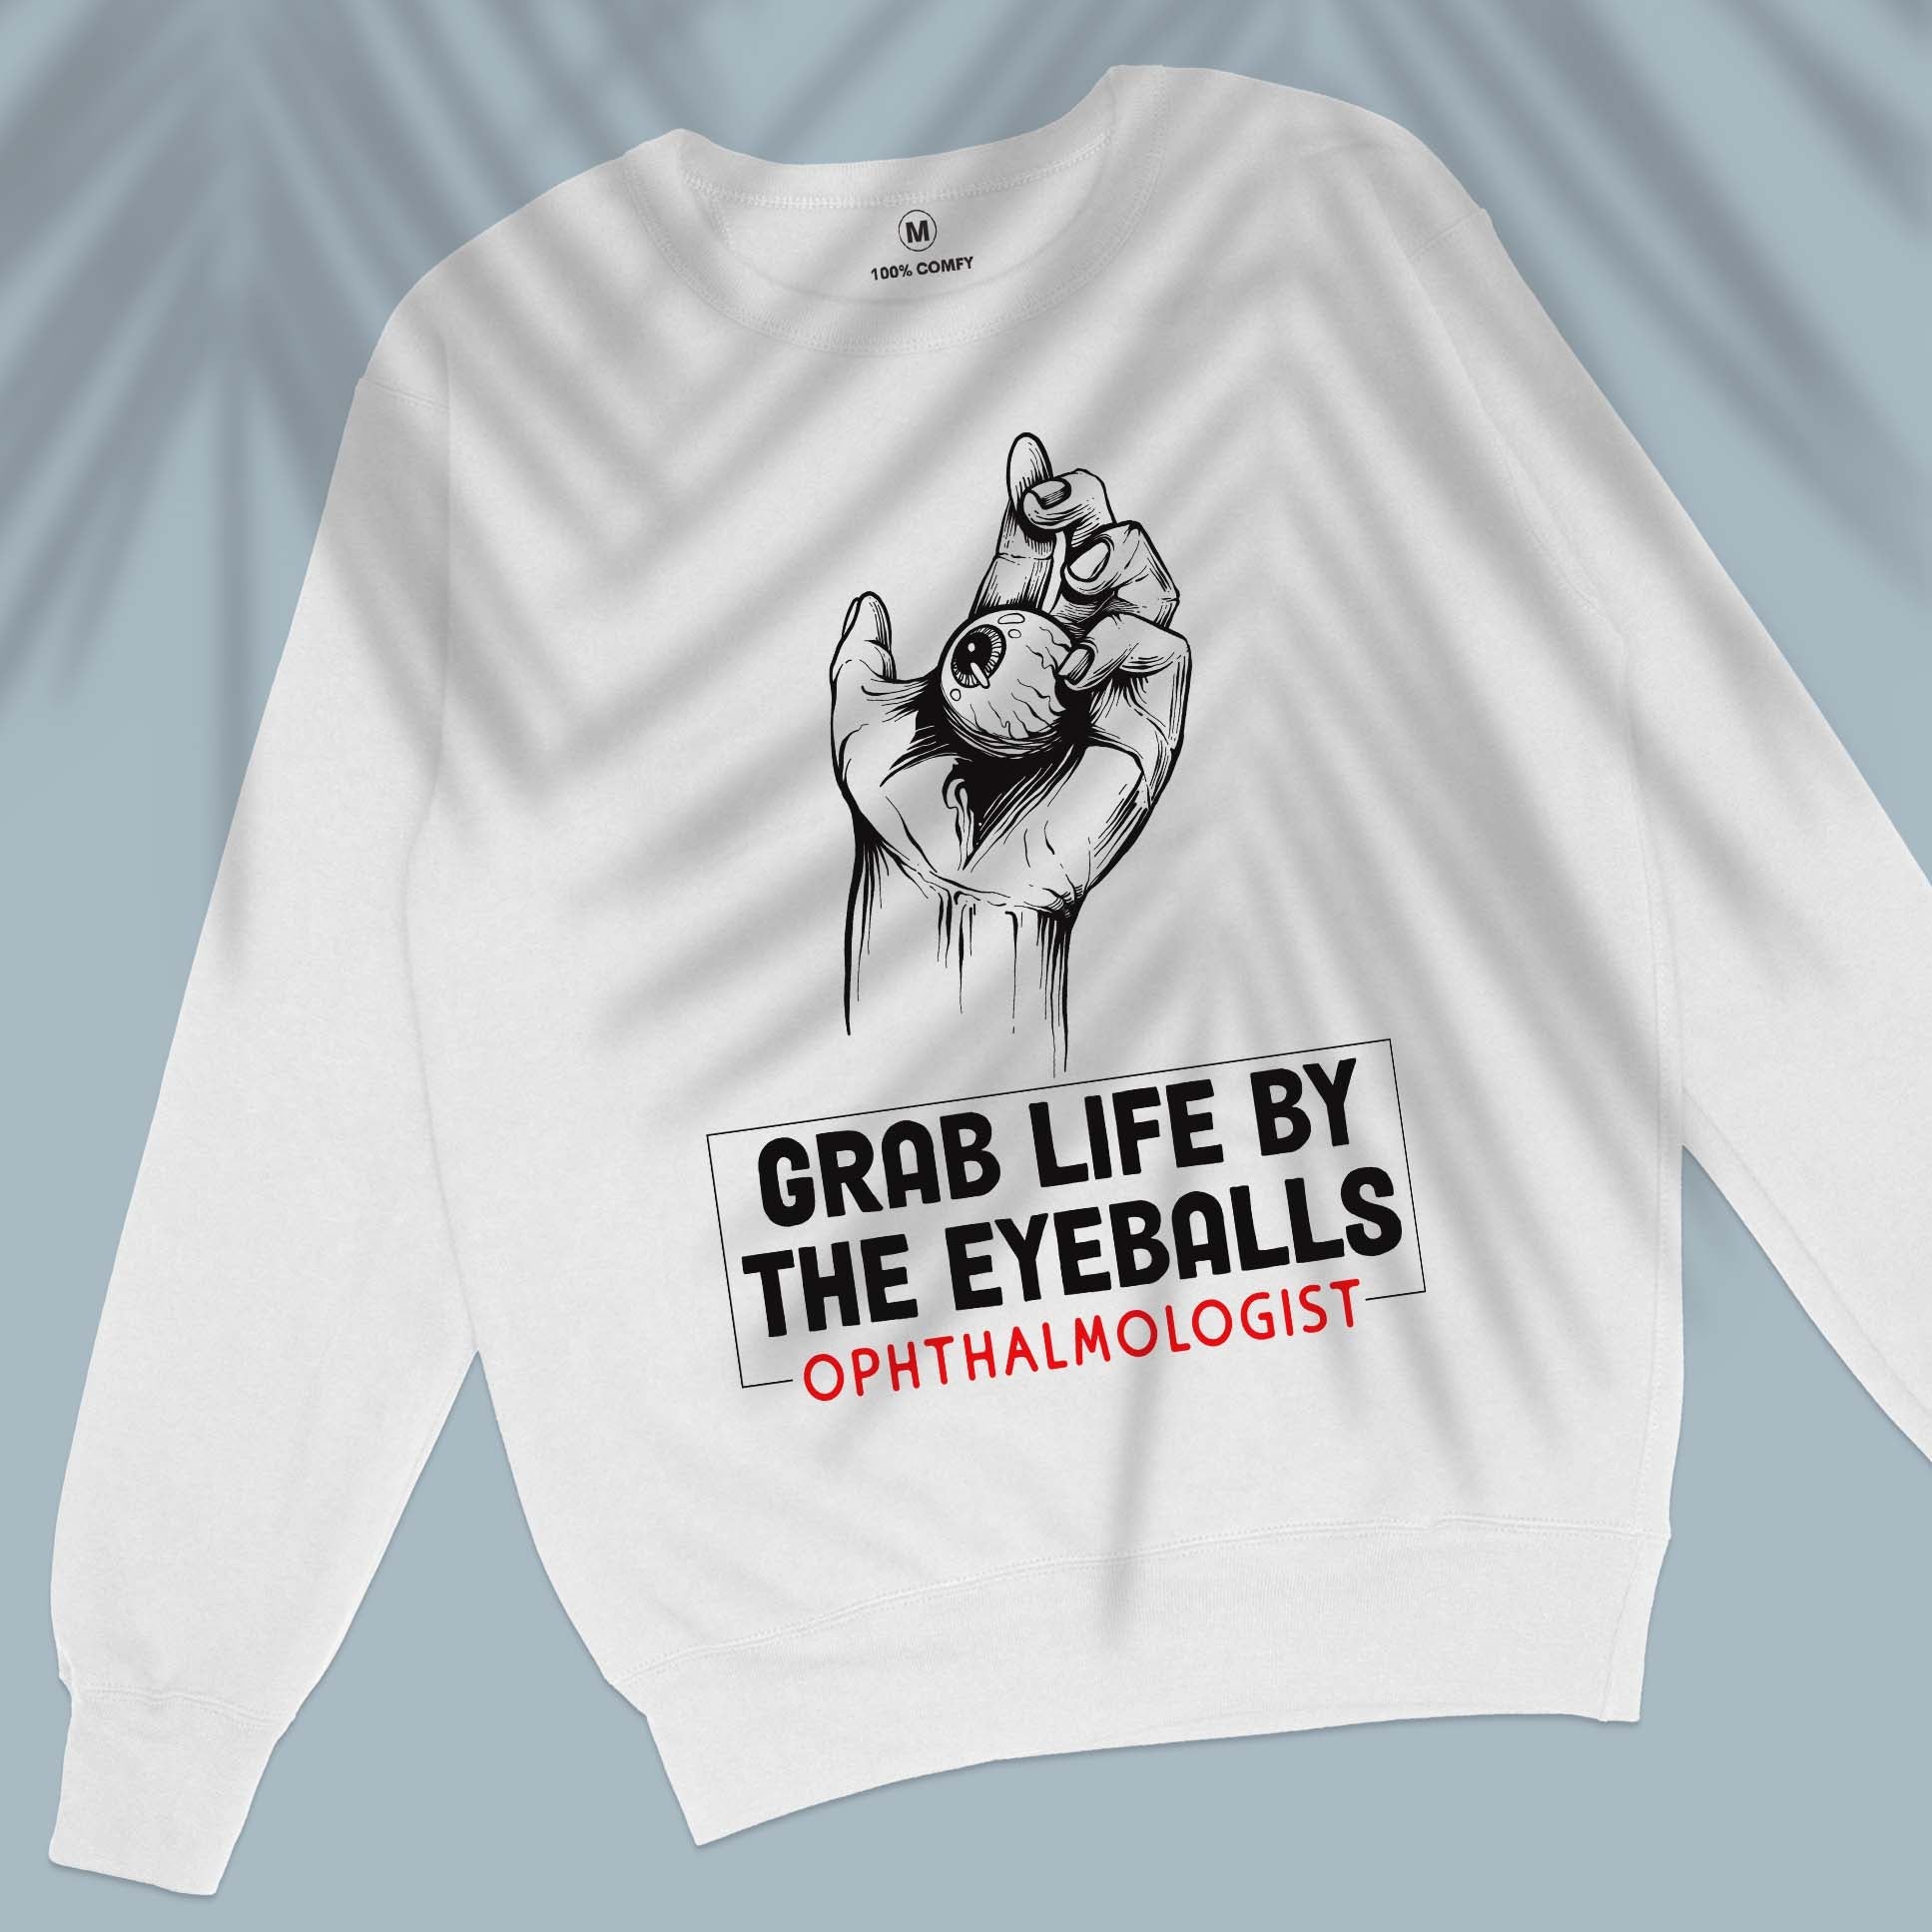 Grab life by the eyeballs - Unisex Sweatshirt